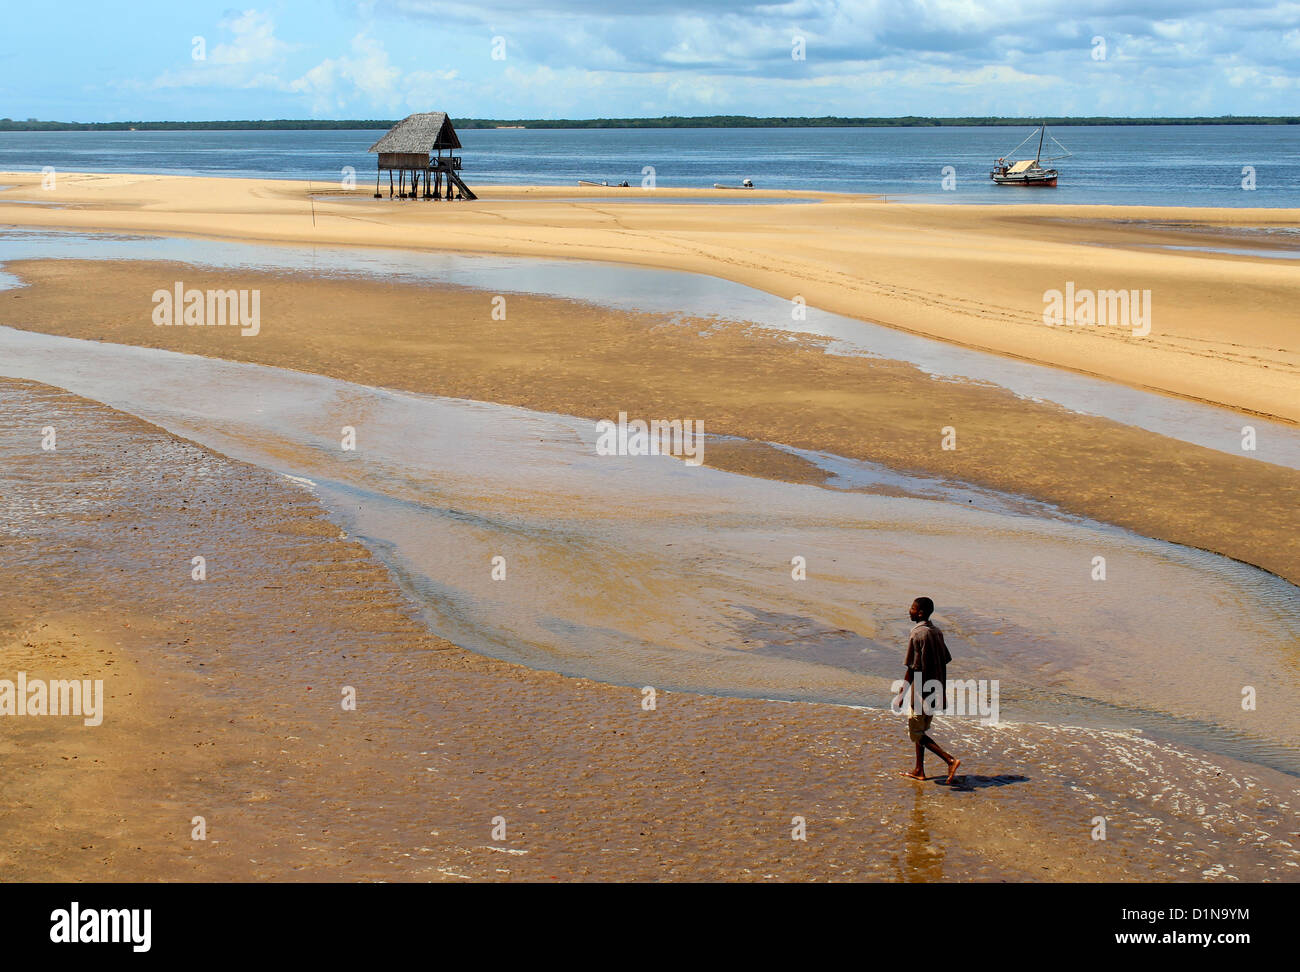 Beach and shore front at the Kipungani Explorer beach resort, Lamu Island, Kenya, East Africa Stock Photo